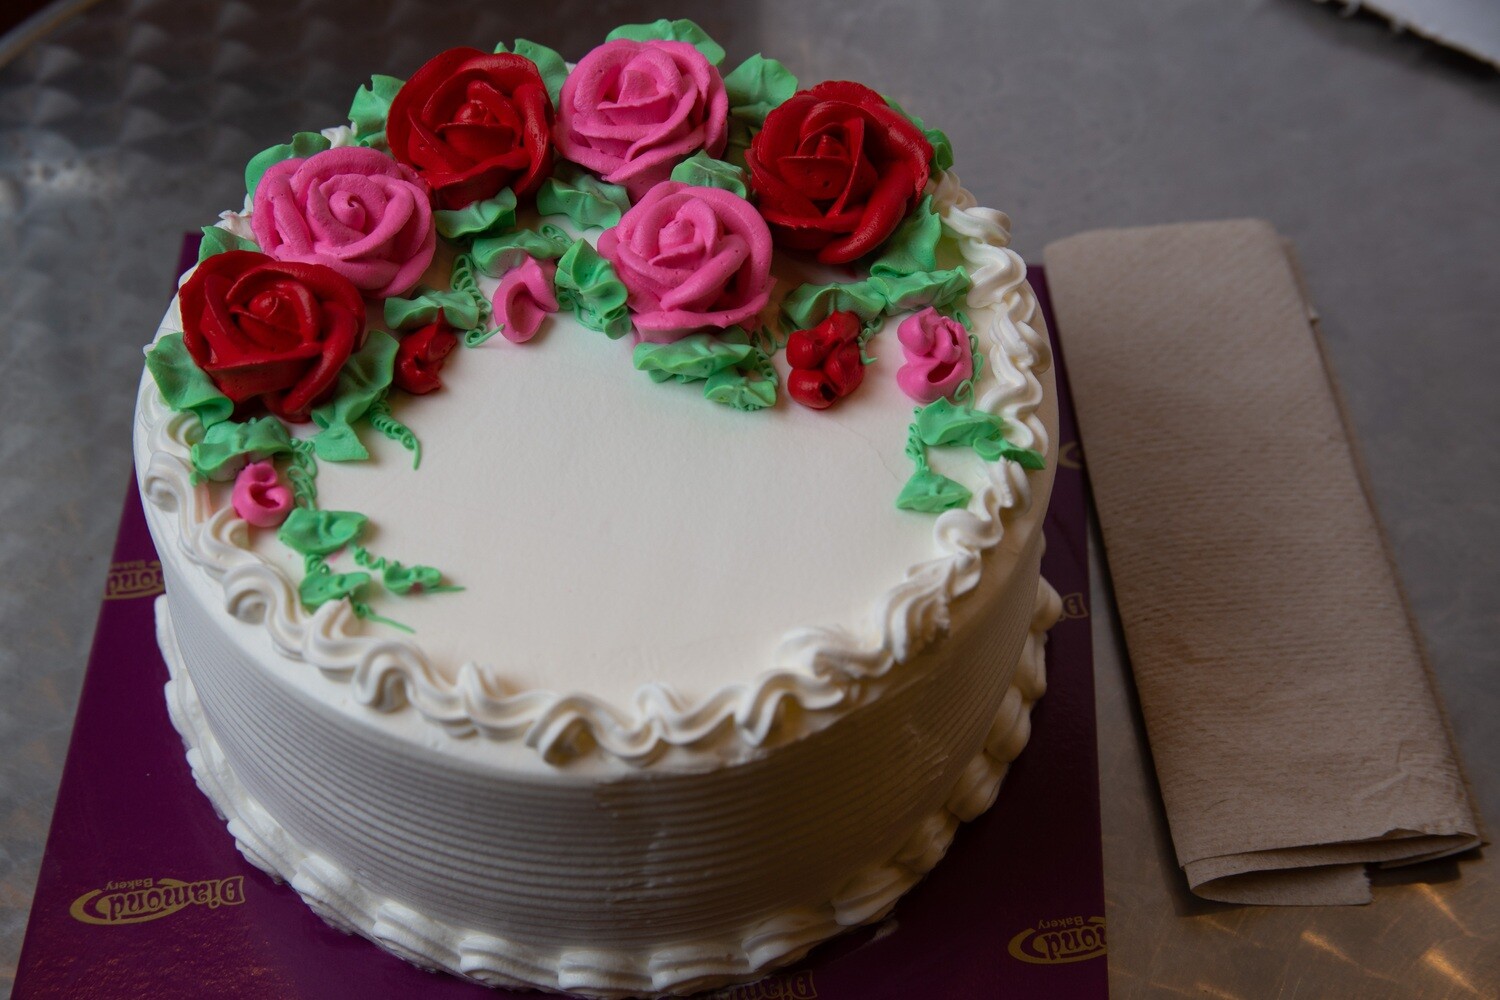 Whip Cream Cake - Flowers